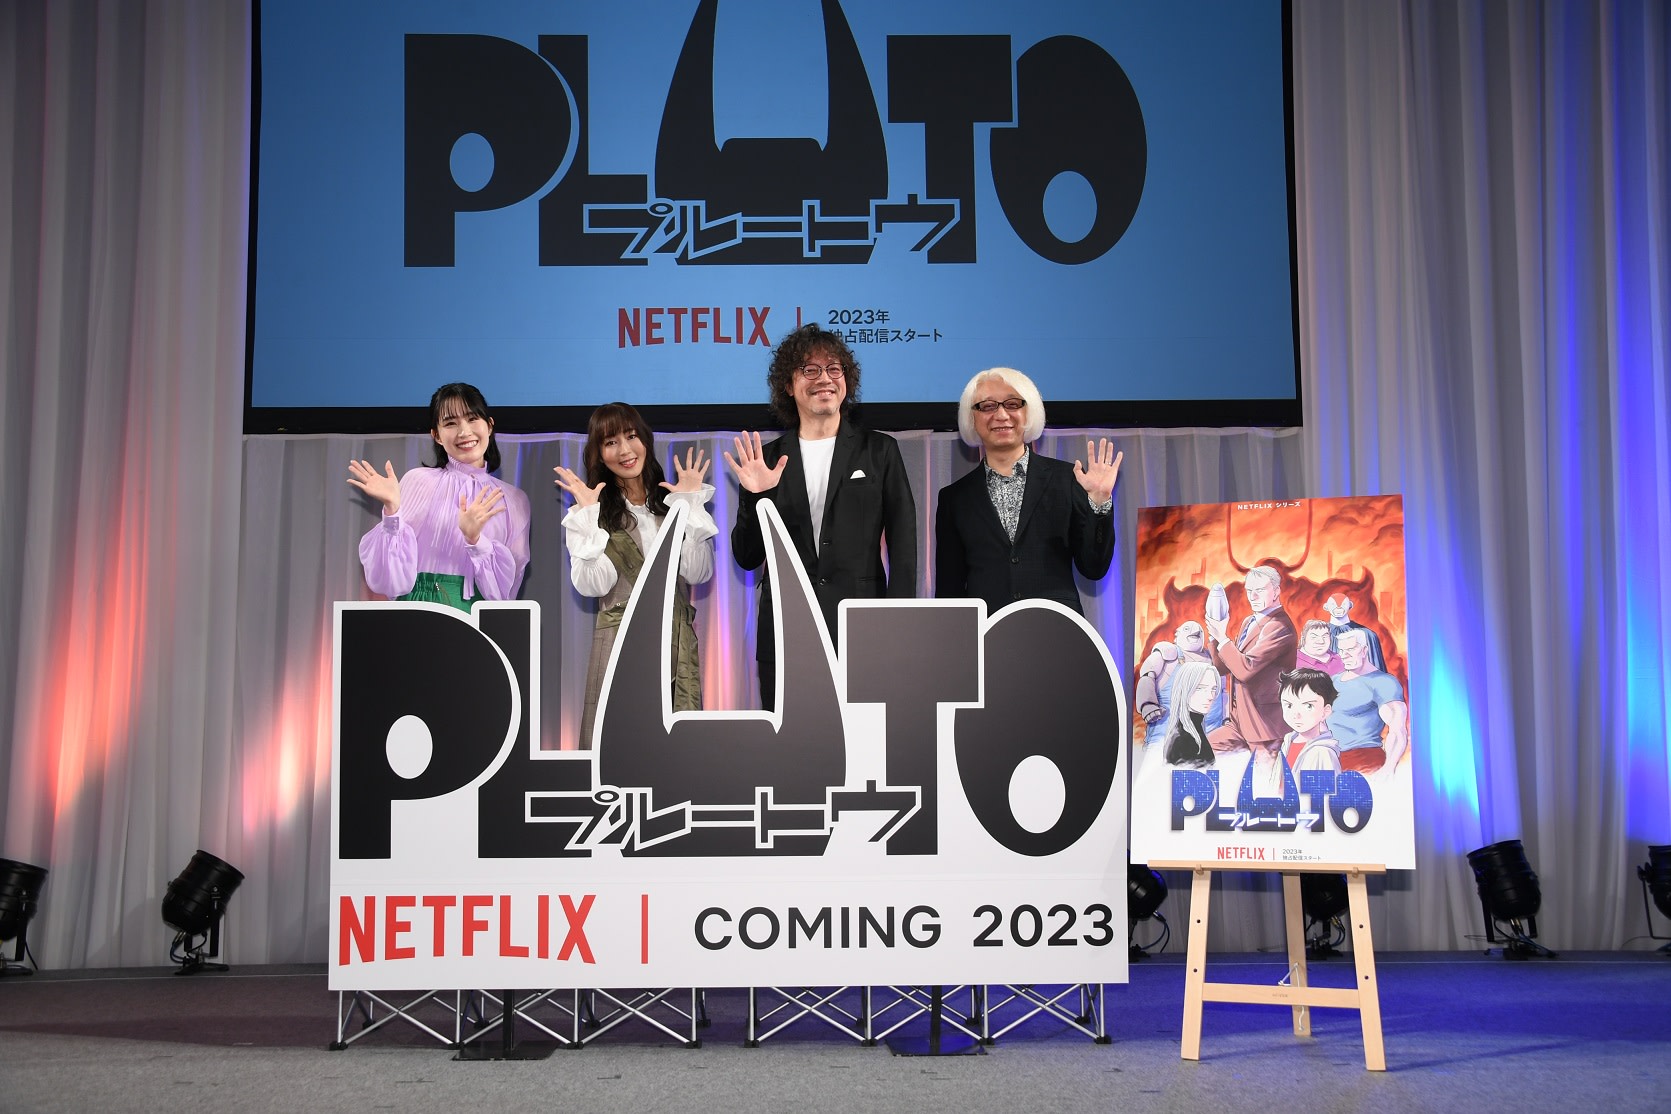 Netflix announces the anime adaptation of the manga series Pluto